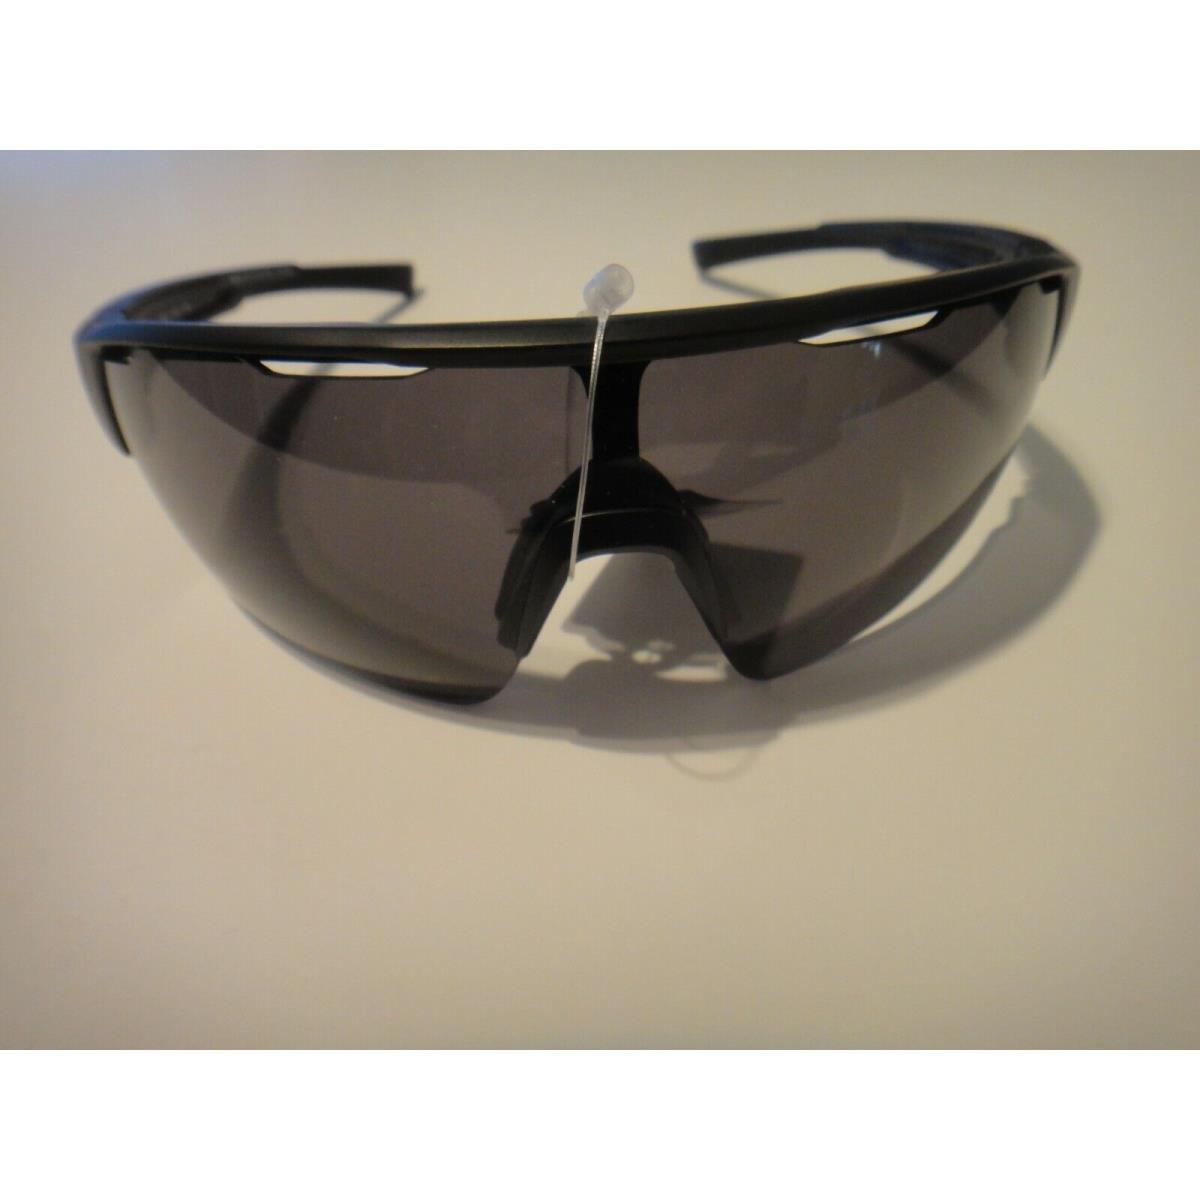 Under Armour sunglasses  - Black Frame 1